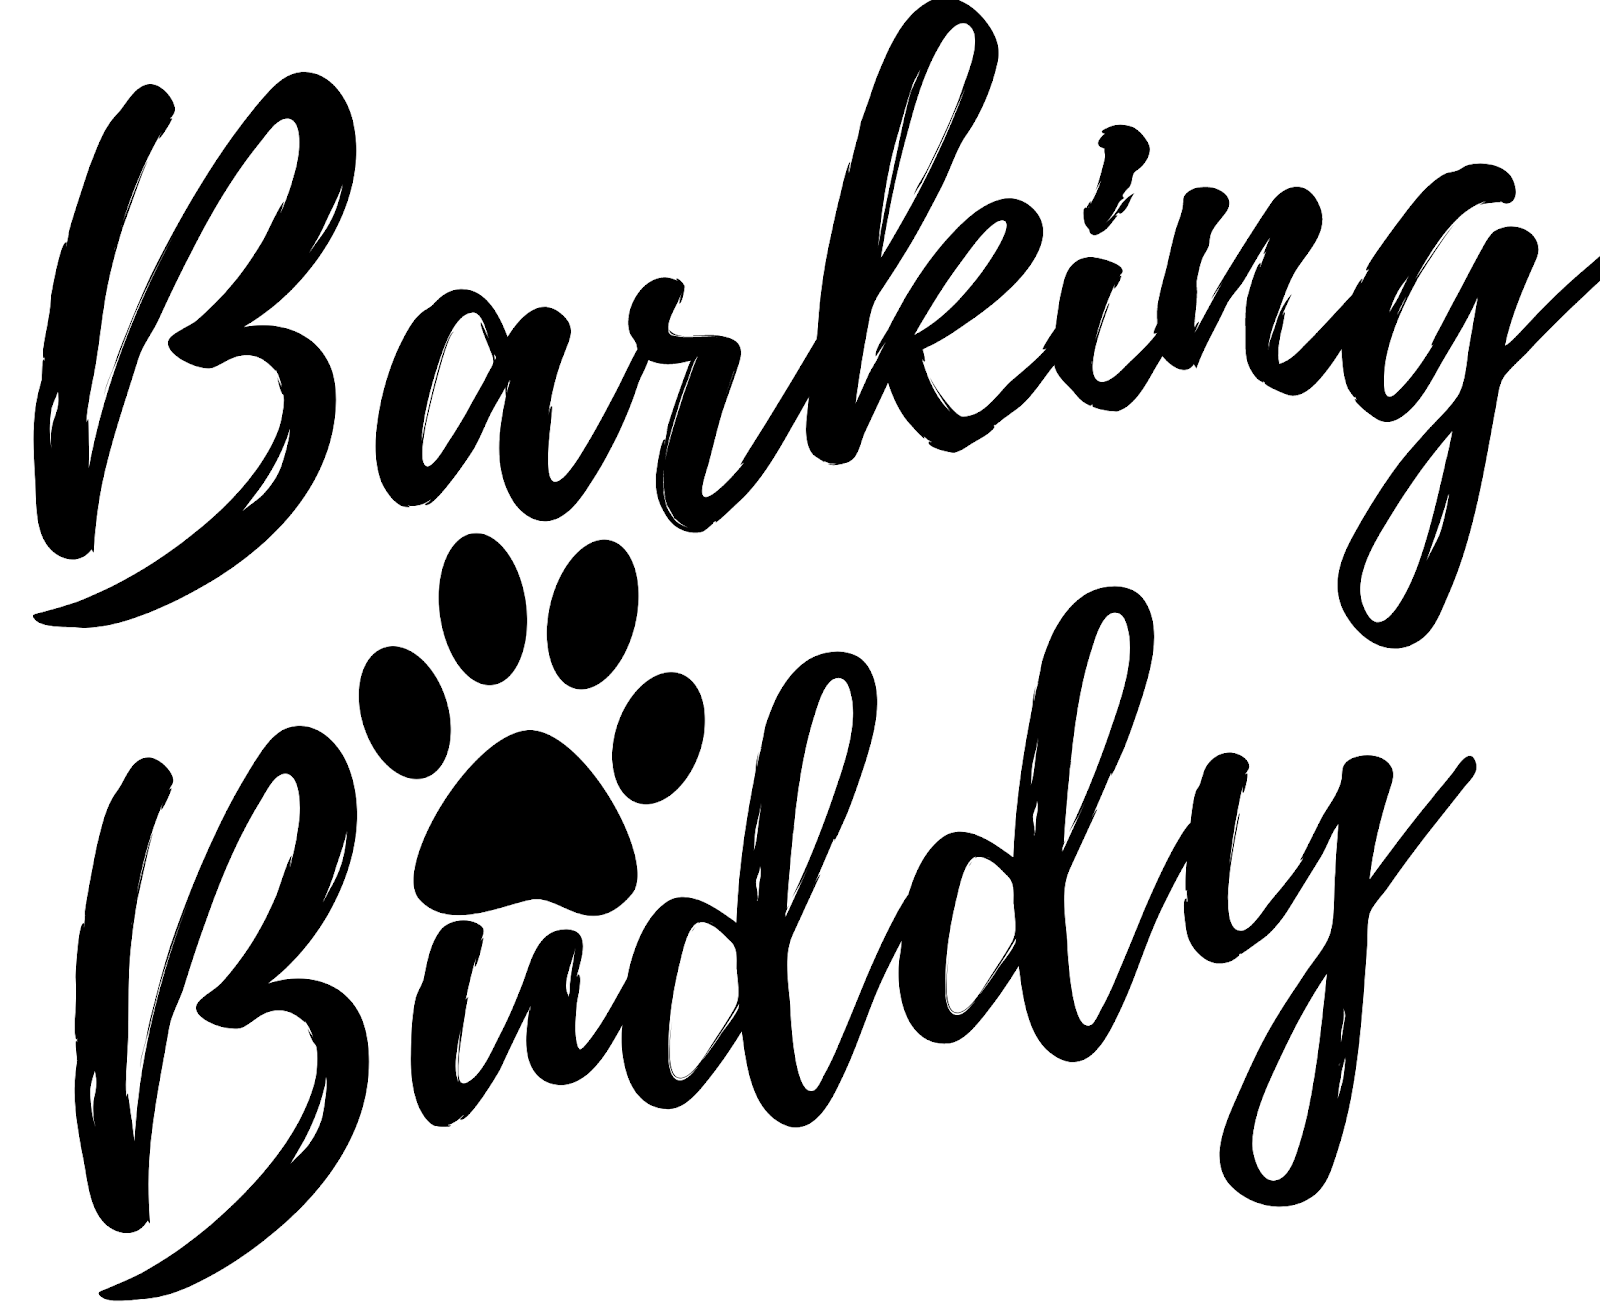 Barking Buddy